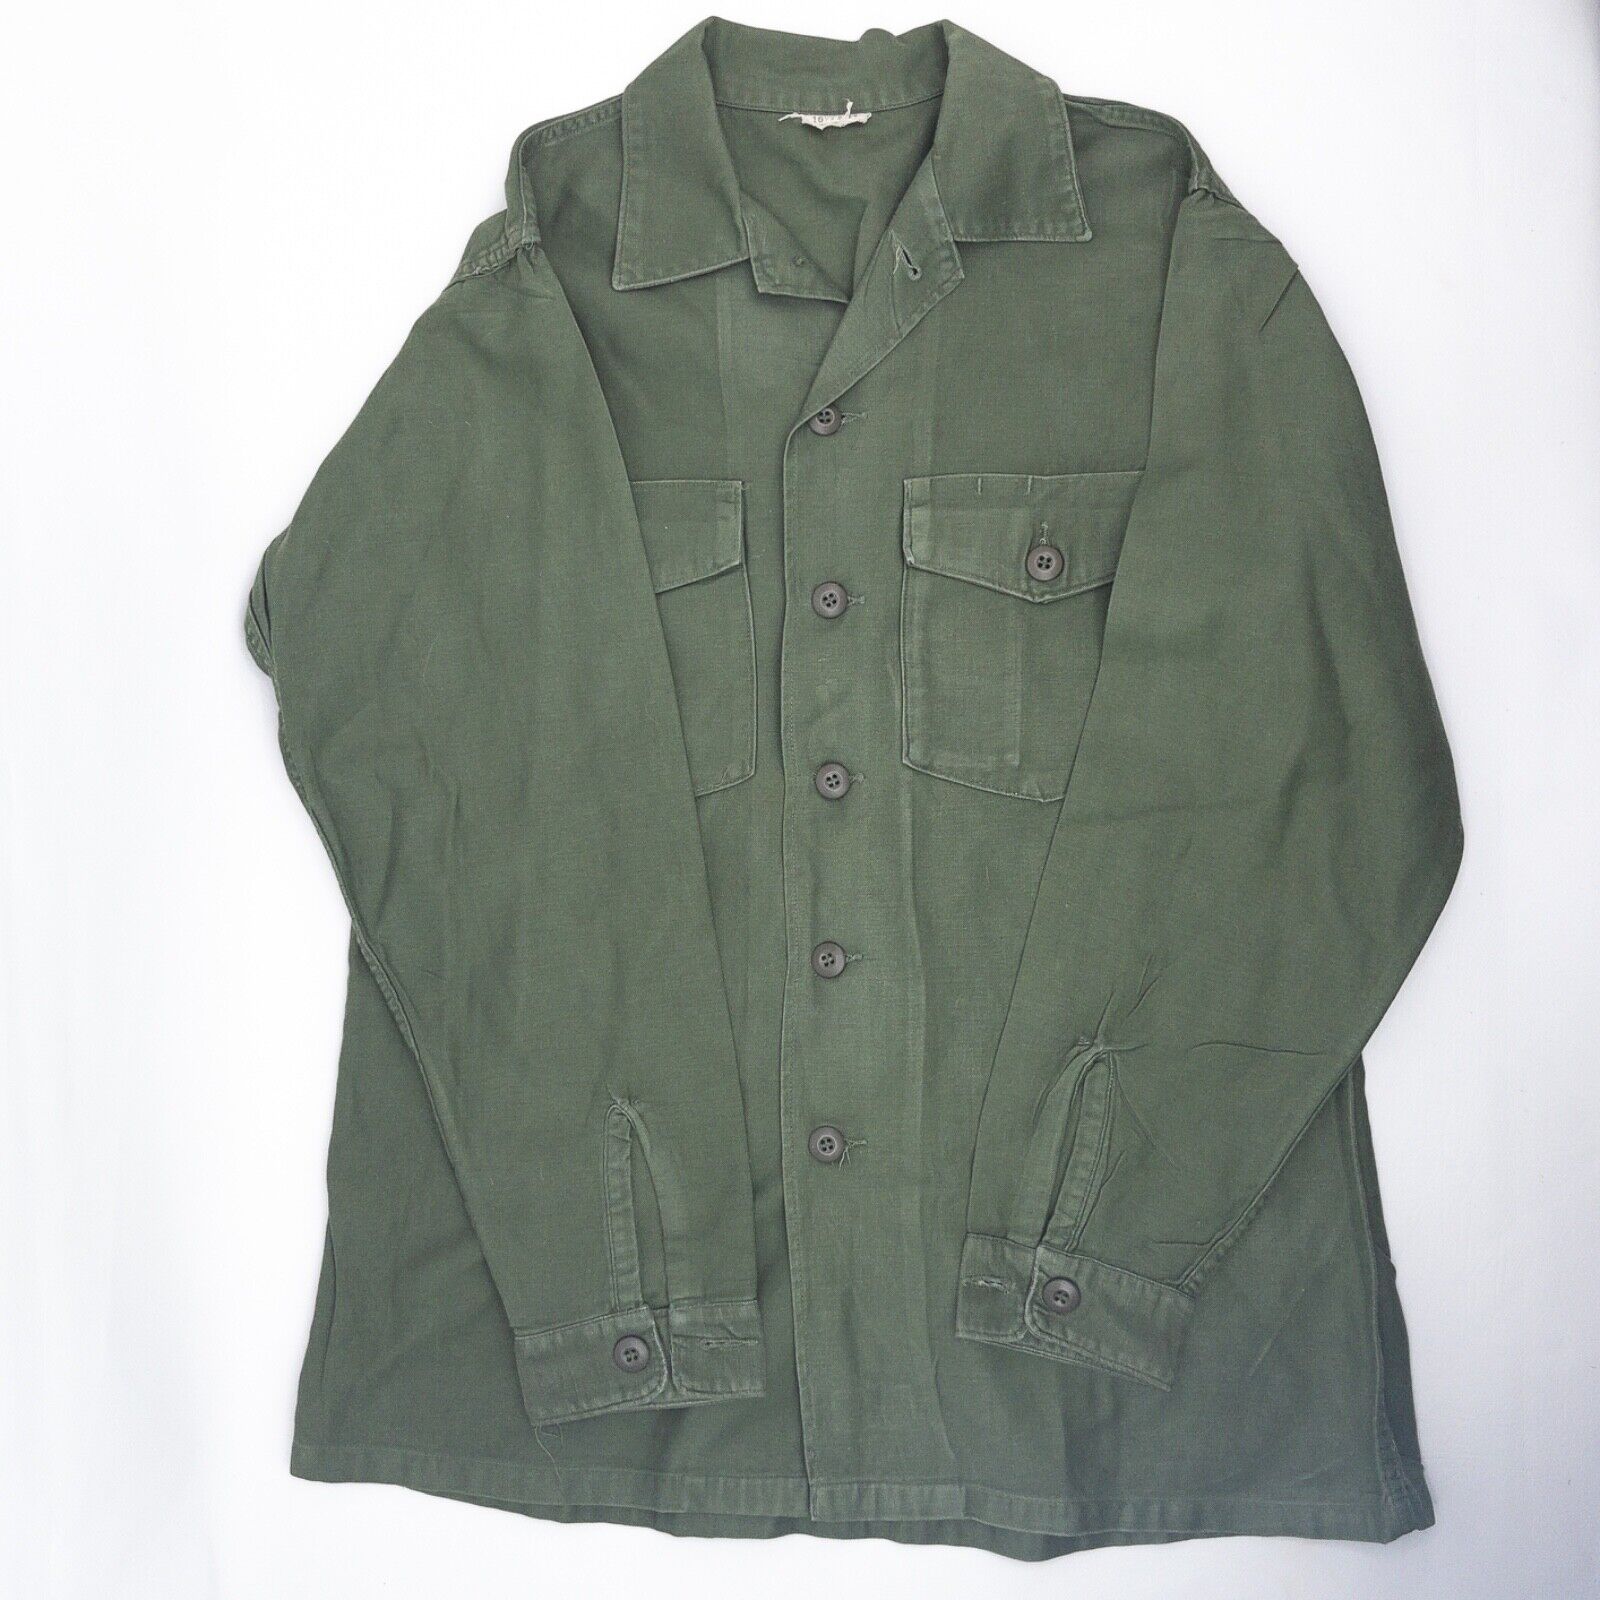 Vintage Army Vietnam Green Cotton Military Shirt 8405-782-3020 Size 16.5 x 34